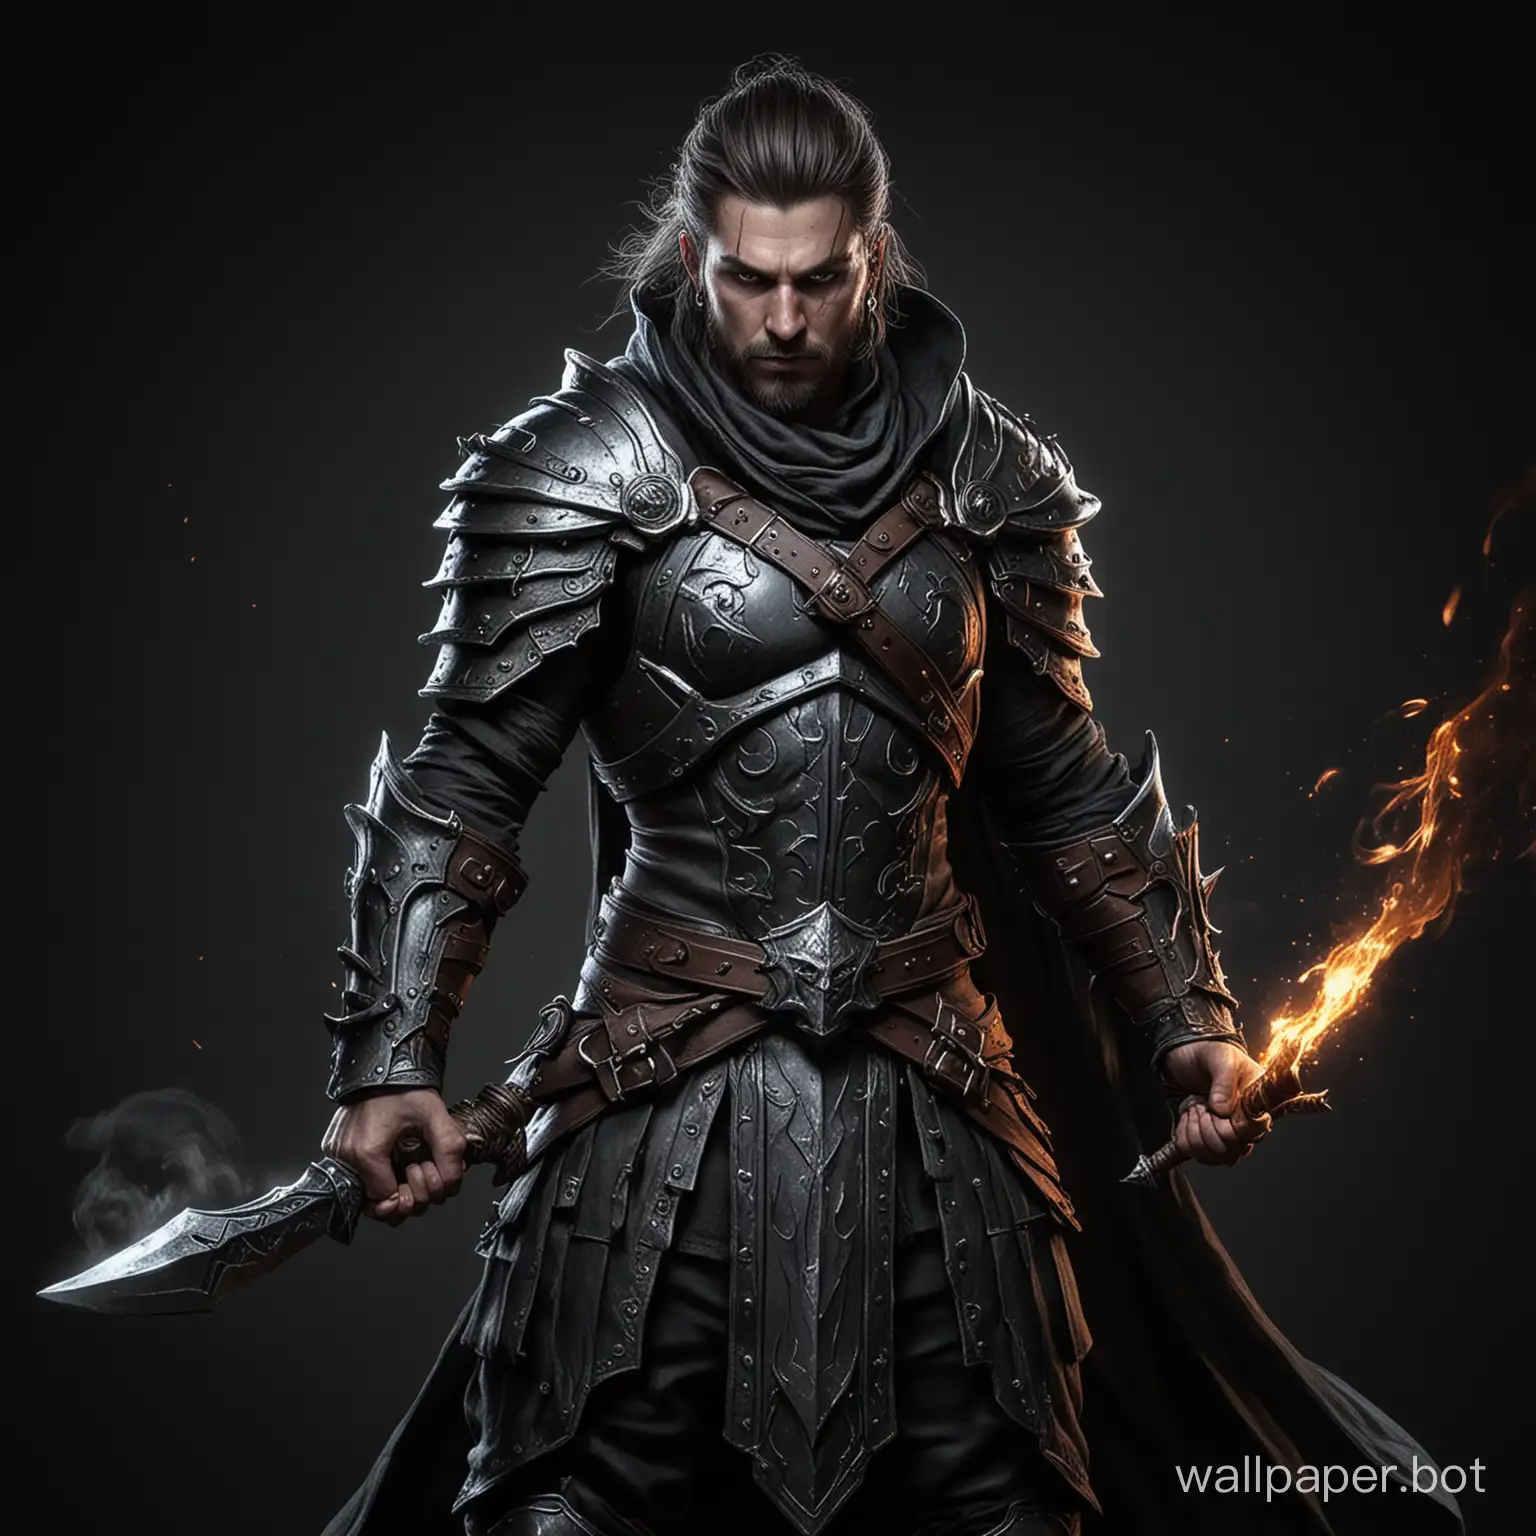 Draw a brutal fantasy mage warrior on a black background